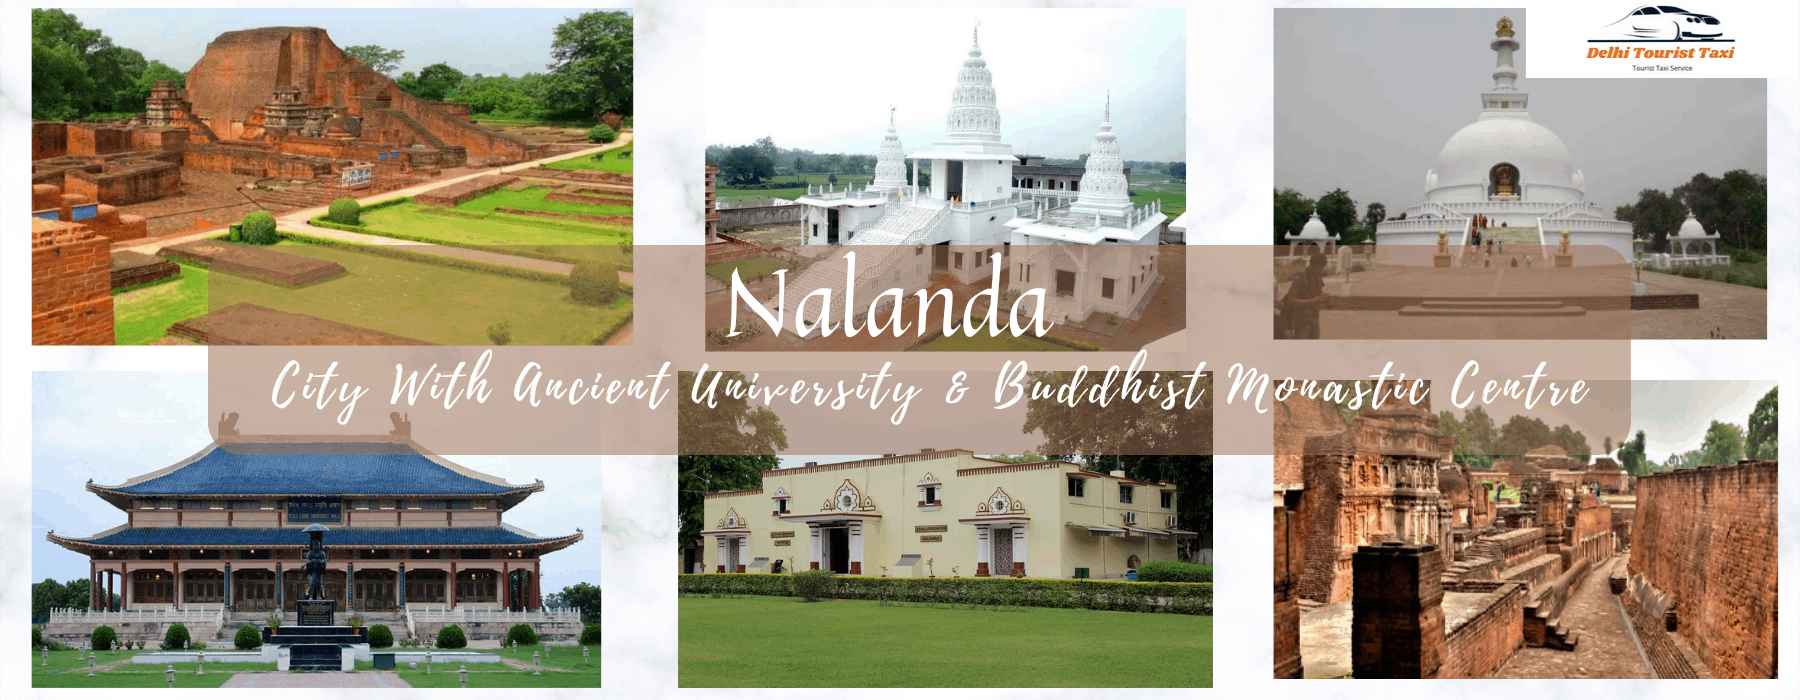 Nalanda_tourist_place